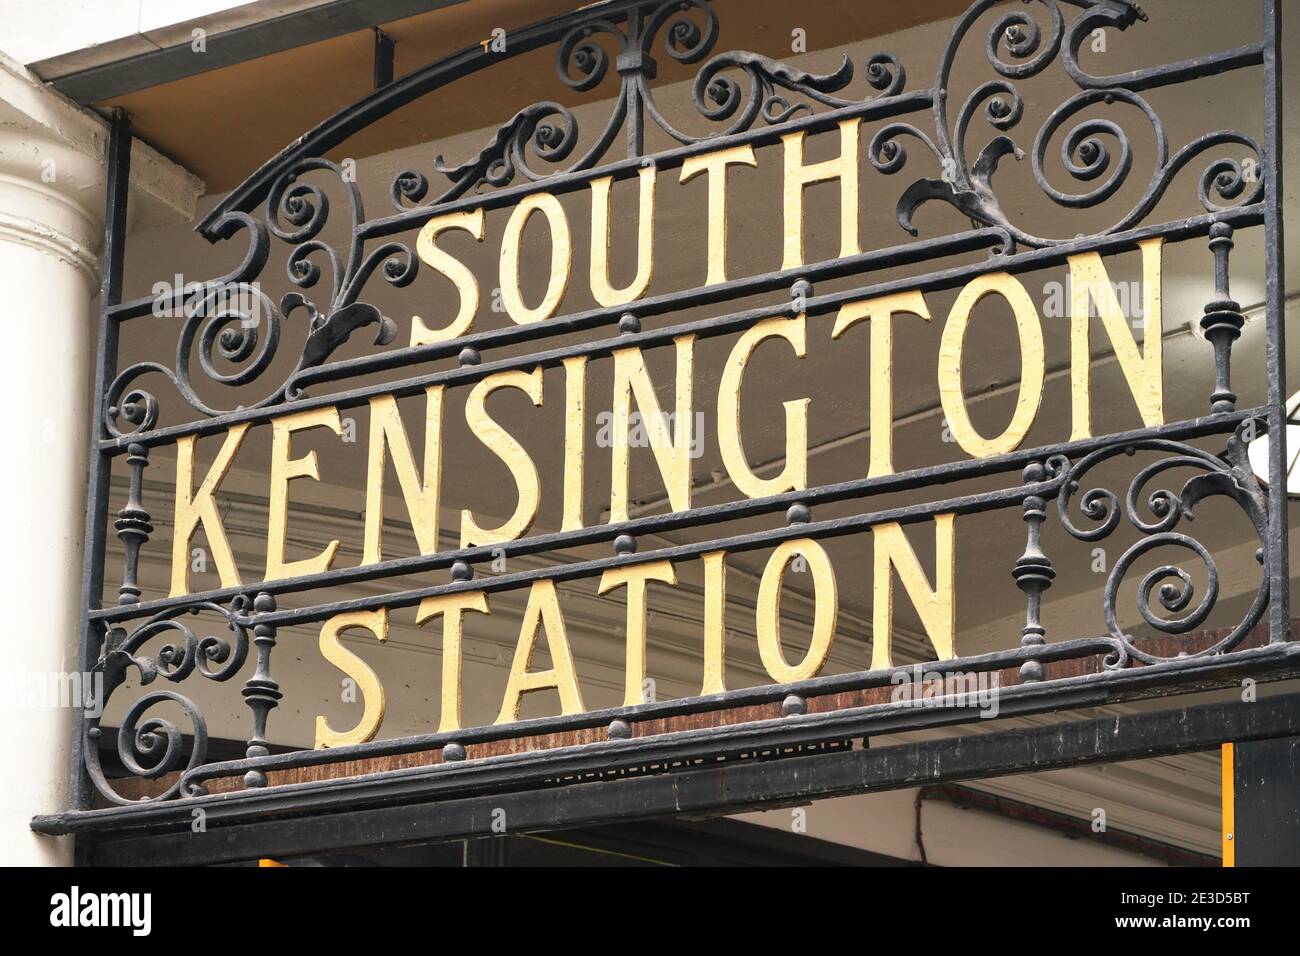 Schild South Kensington Station am Eingang zur Londoner U-Bahn Station Stockfoto